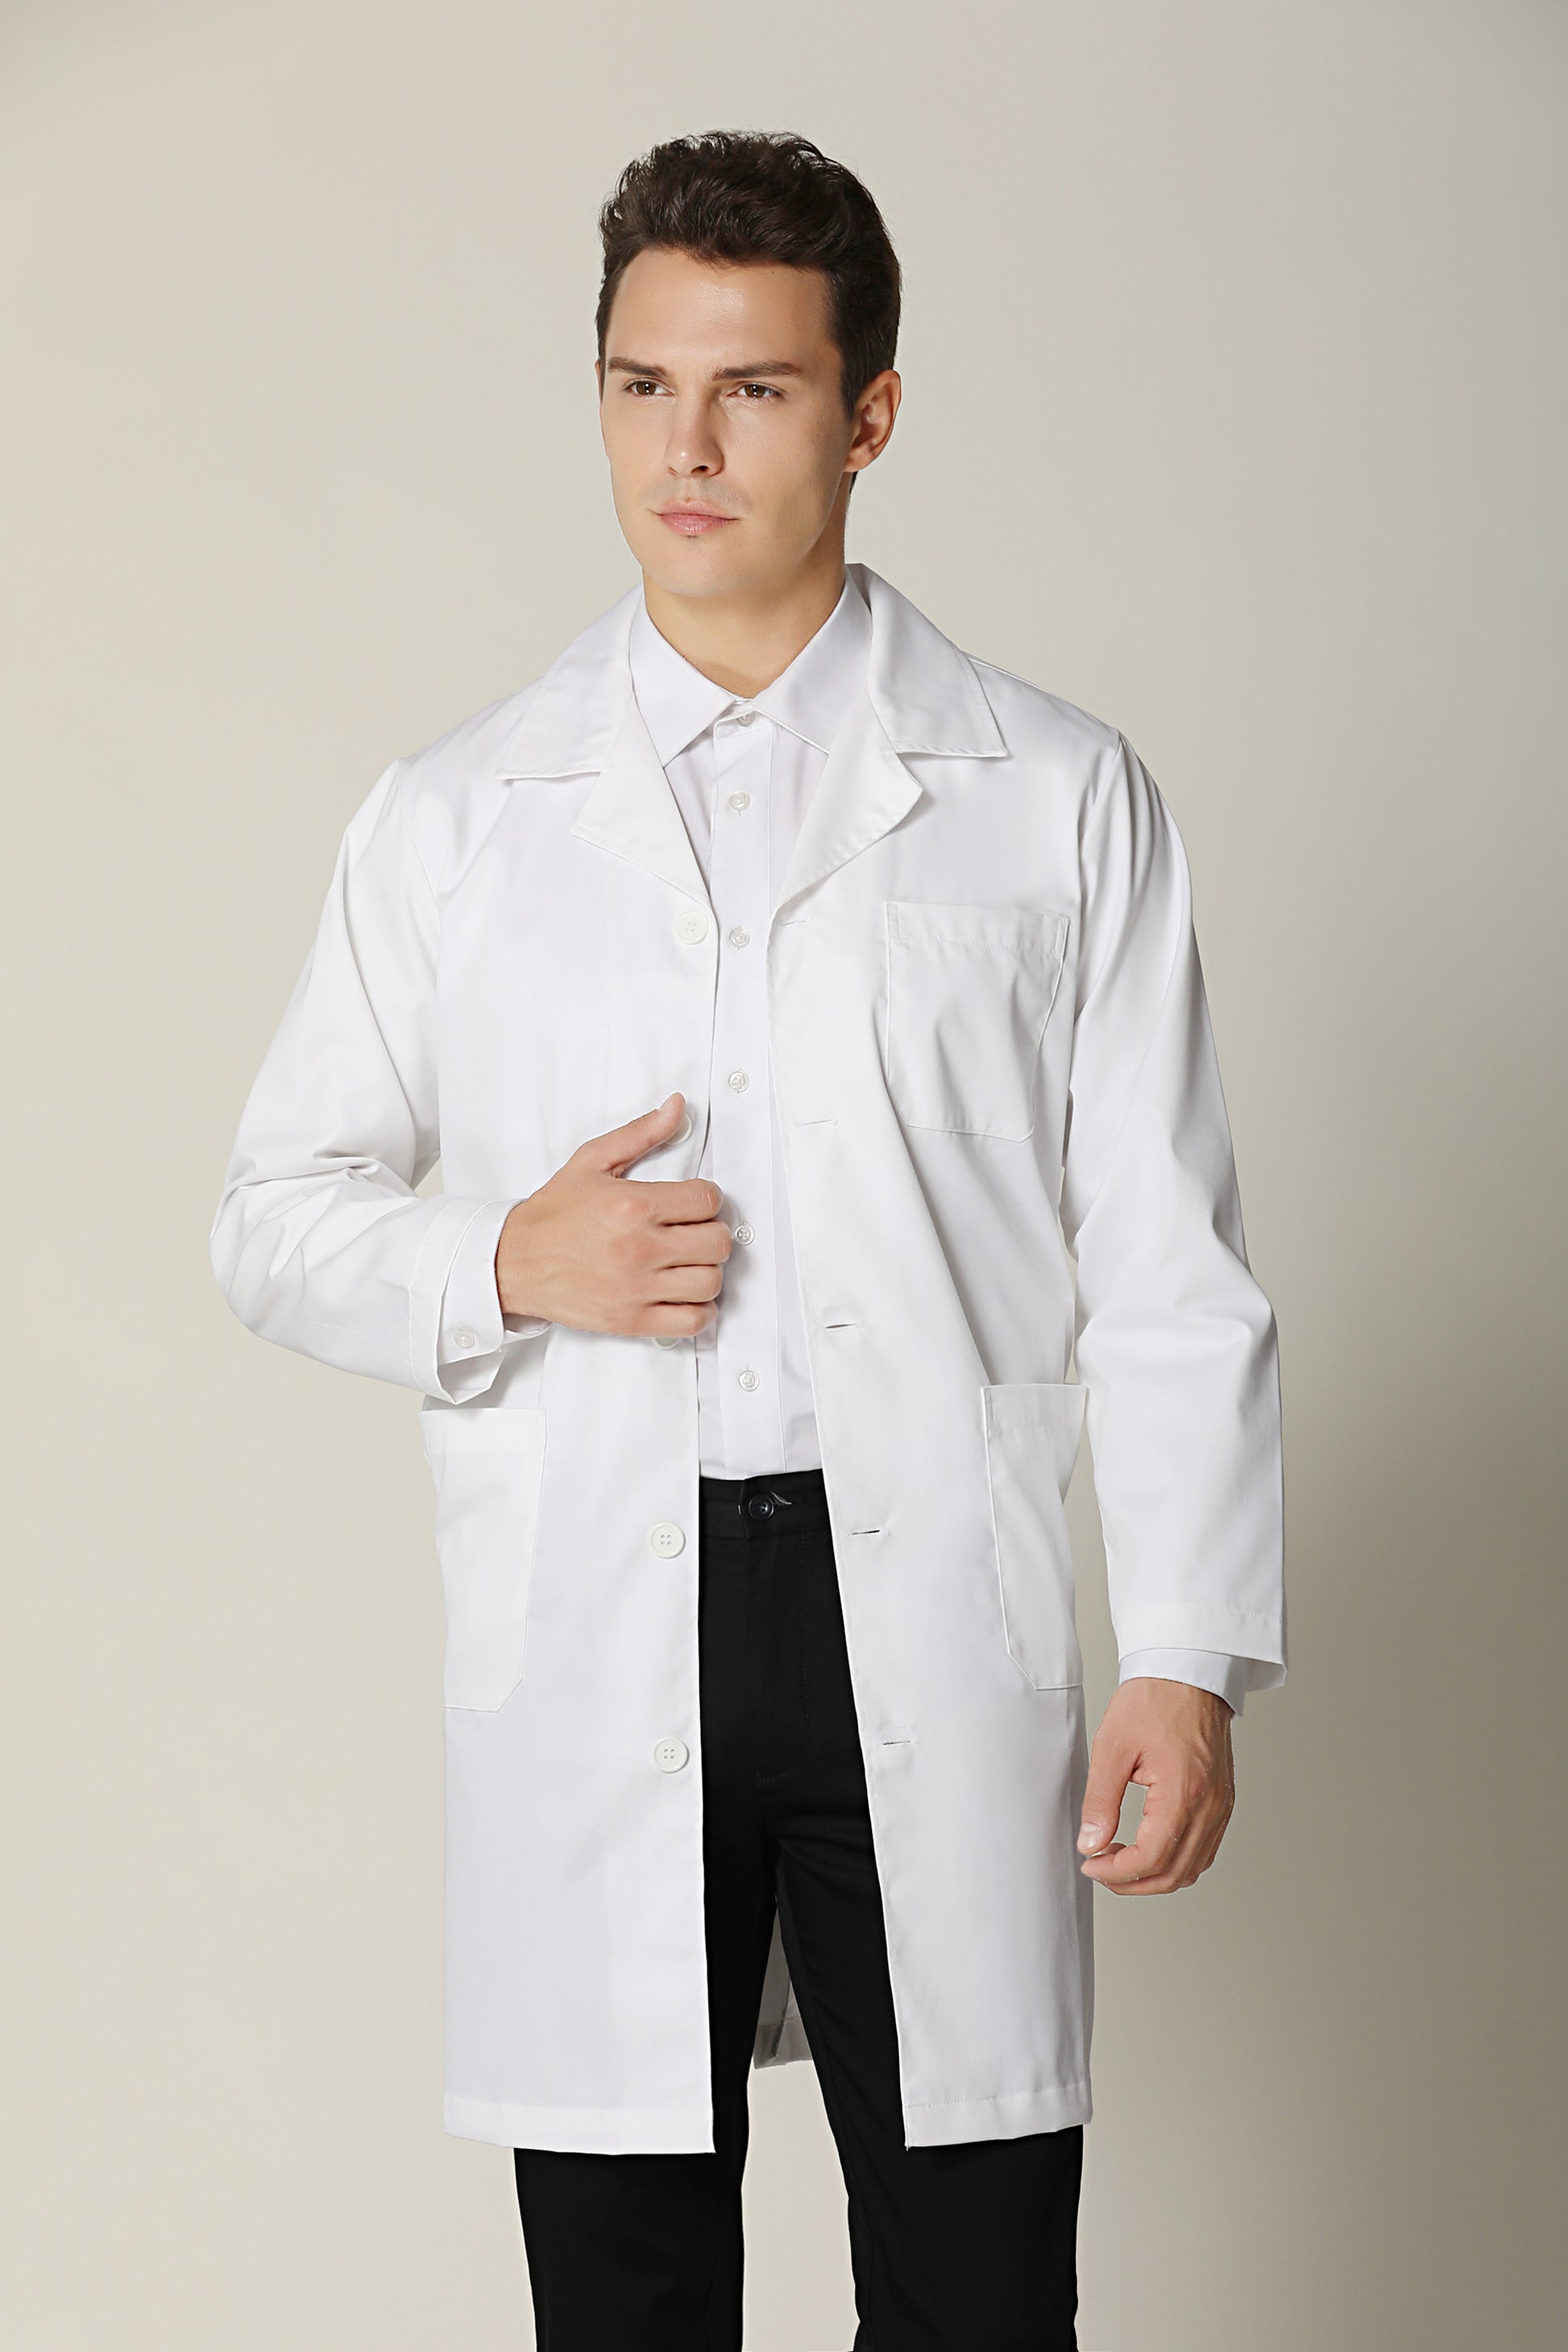 Laboratory Coat - Green Chef Wear